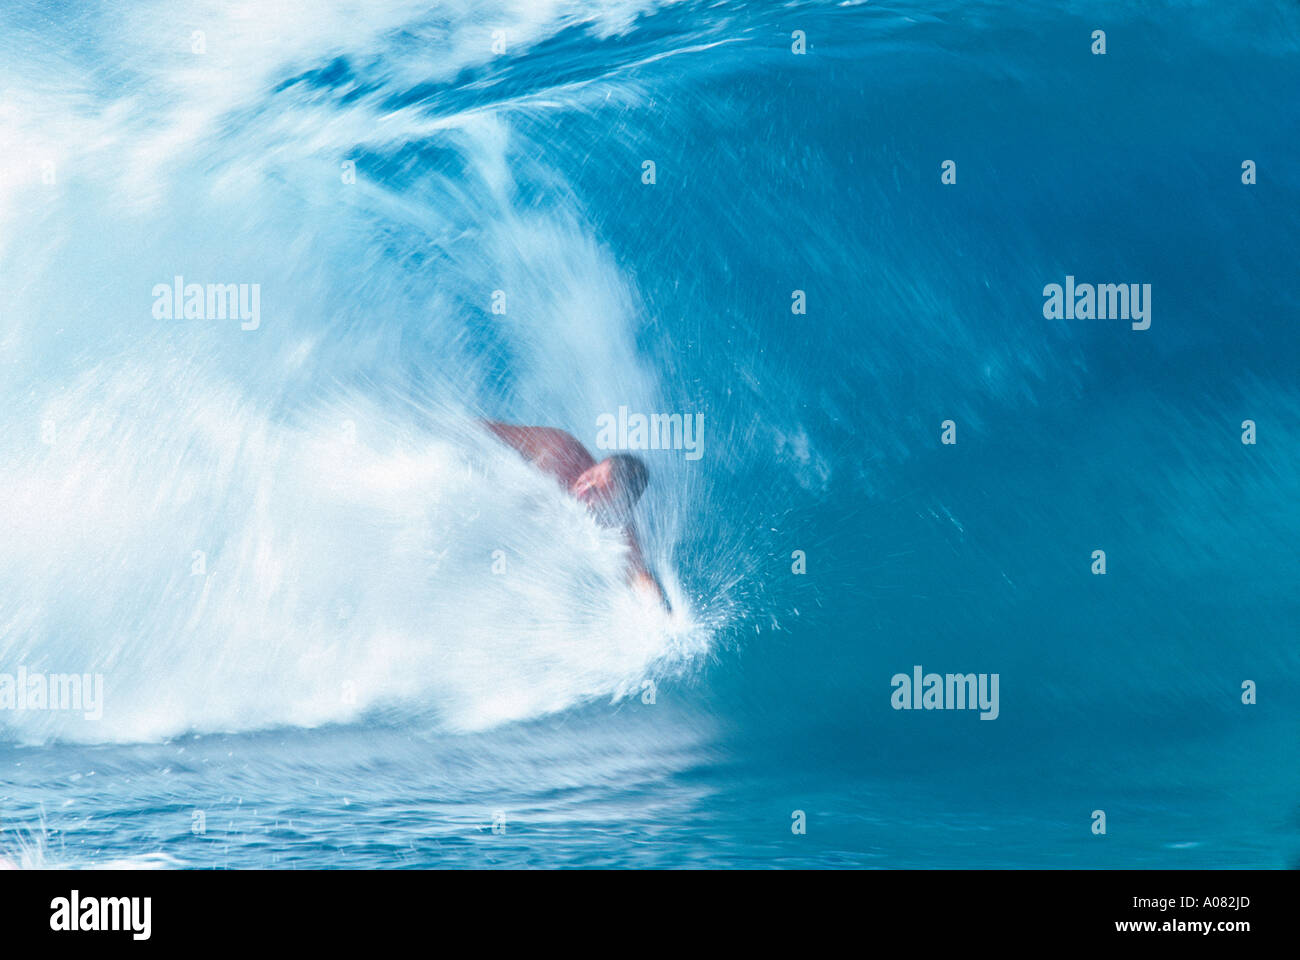 A bodysurfer riding a wave in Hawaii Hawaii USA UNITED STATES Stock Photo